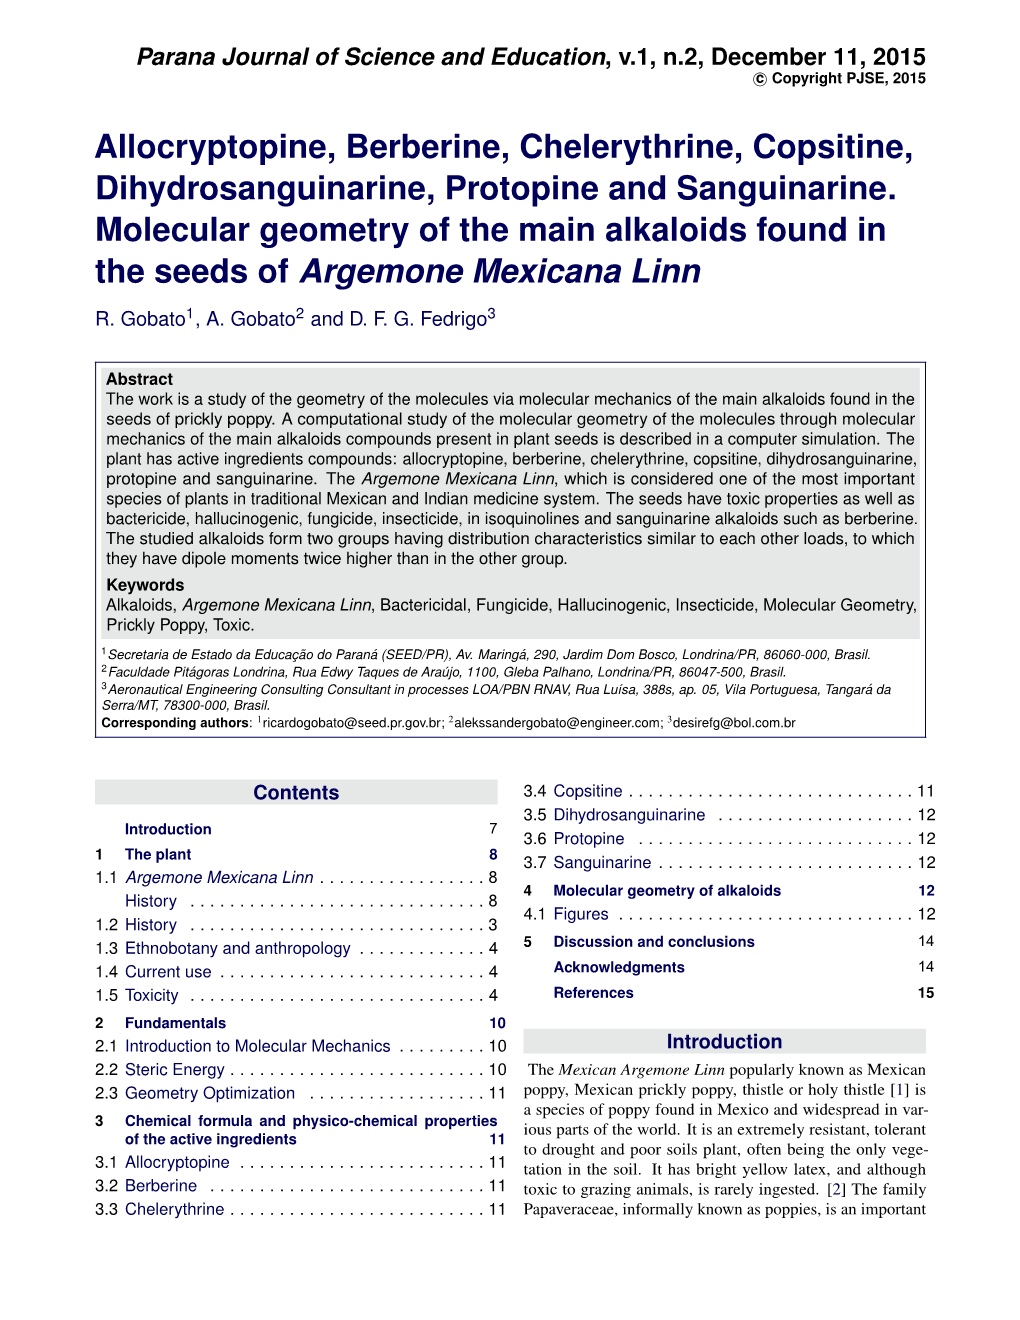 Allocryptopine, Berberine, Chelerythrine, Copsitine, Dihydrosanguinarine, Protopine and Sanguinarine